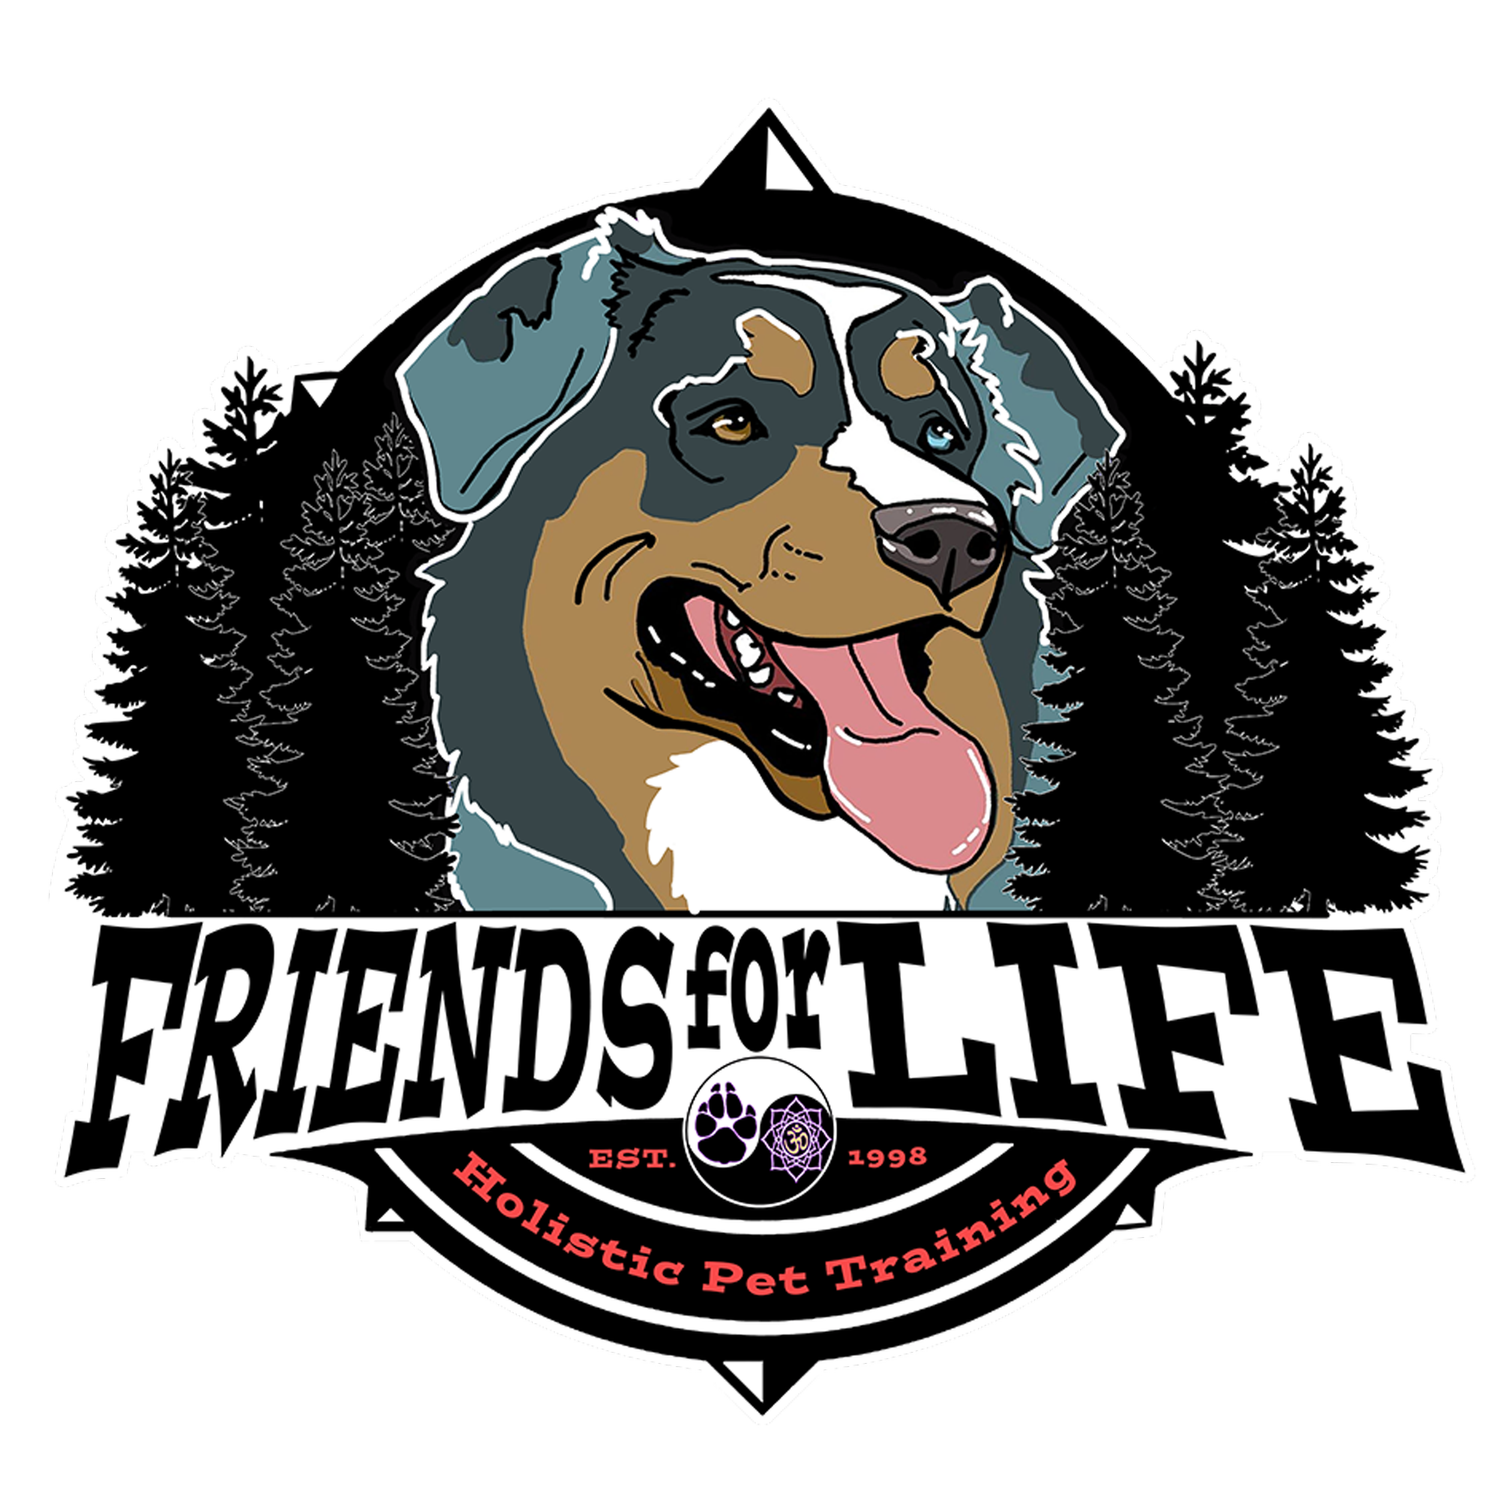 Friends for Life Holisitic Pet Training LLC